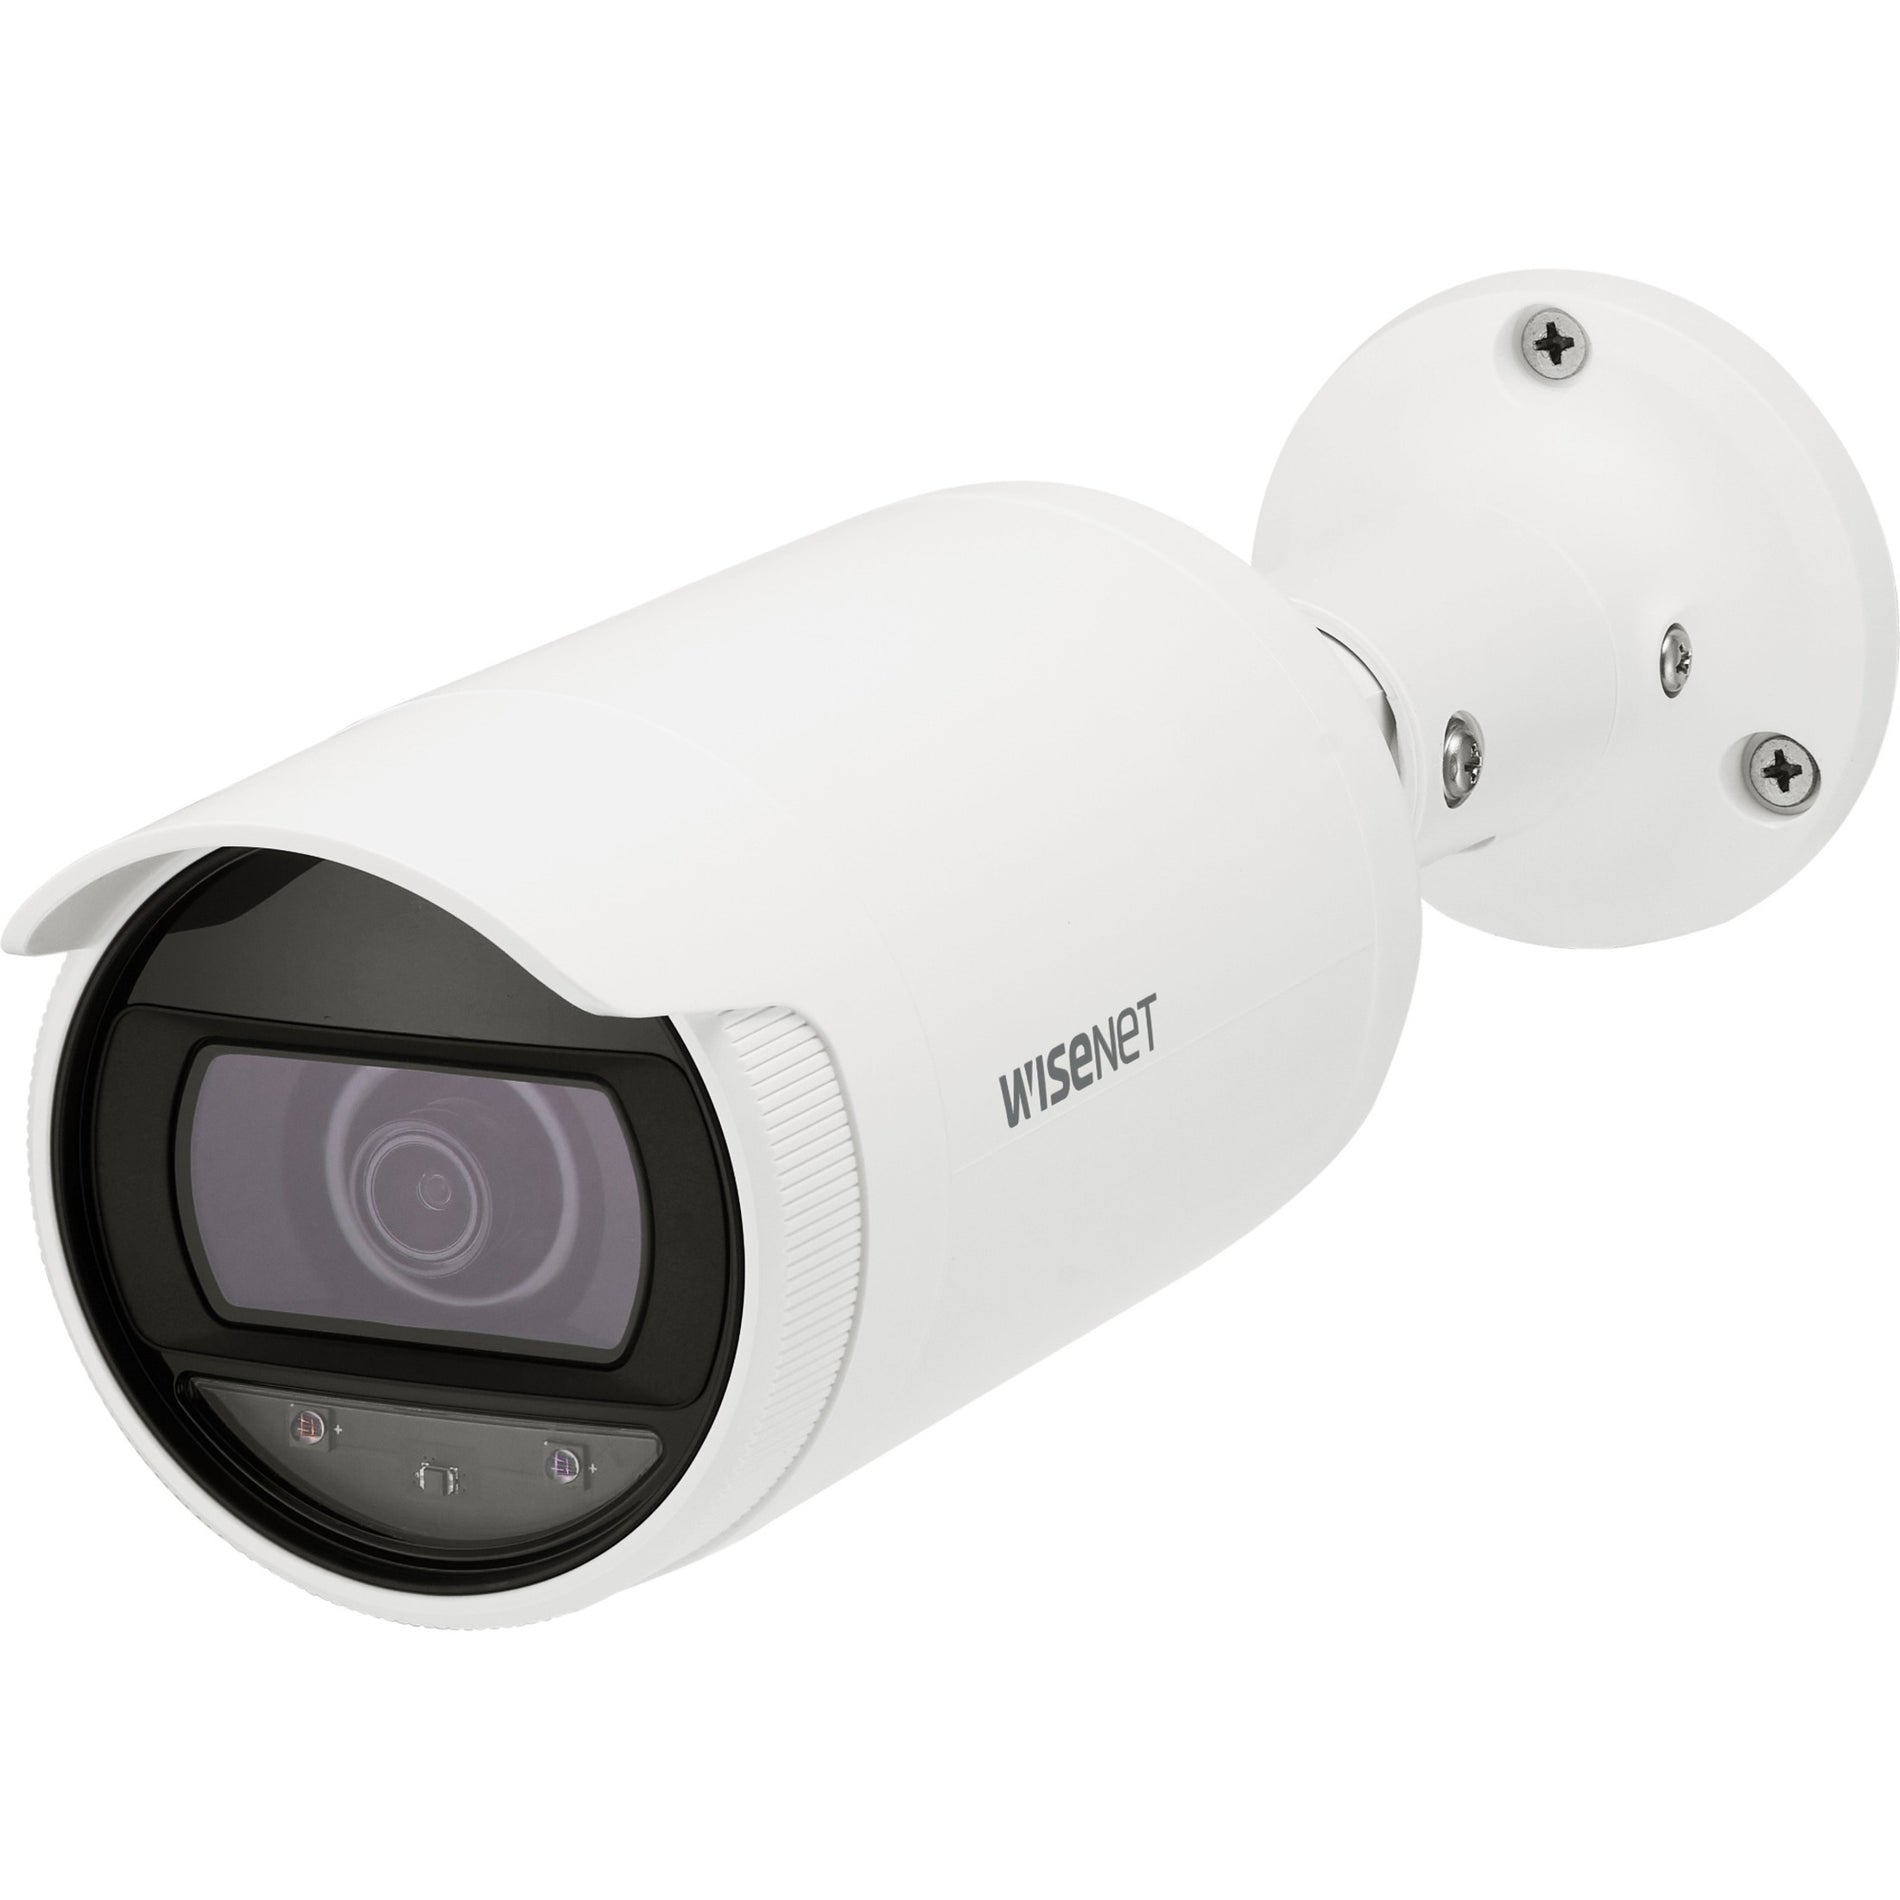 Wisenet ANO-L6012R 2MP Bullet IR Camera, Full HD, Color, IP66, PoE